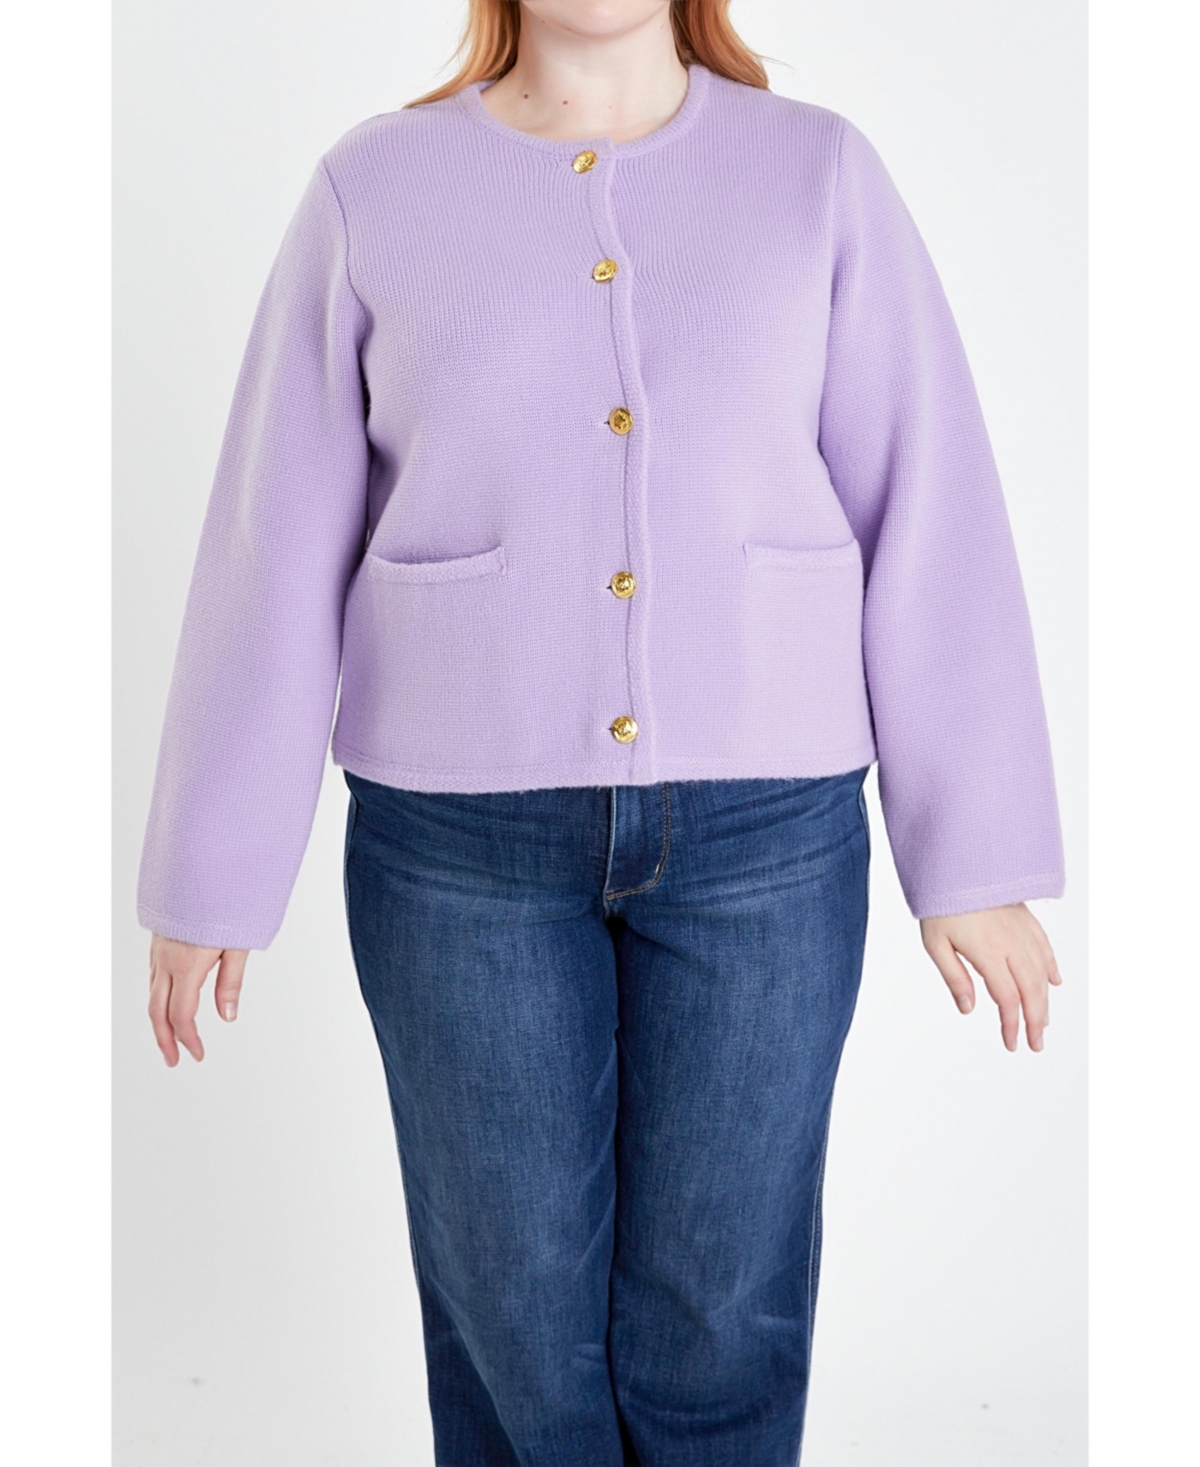 Plus Size Knit Sweater Cardigan - Lilac